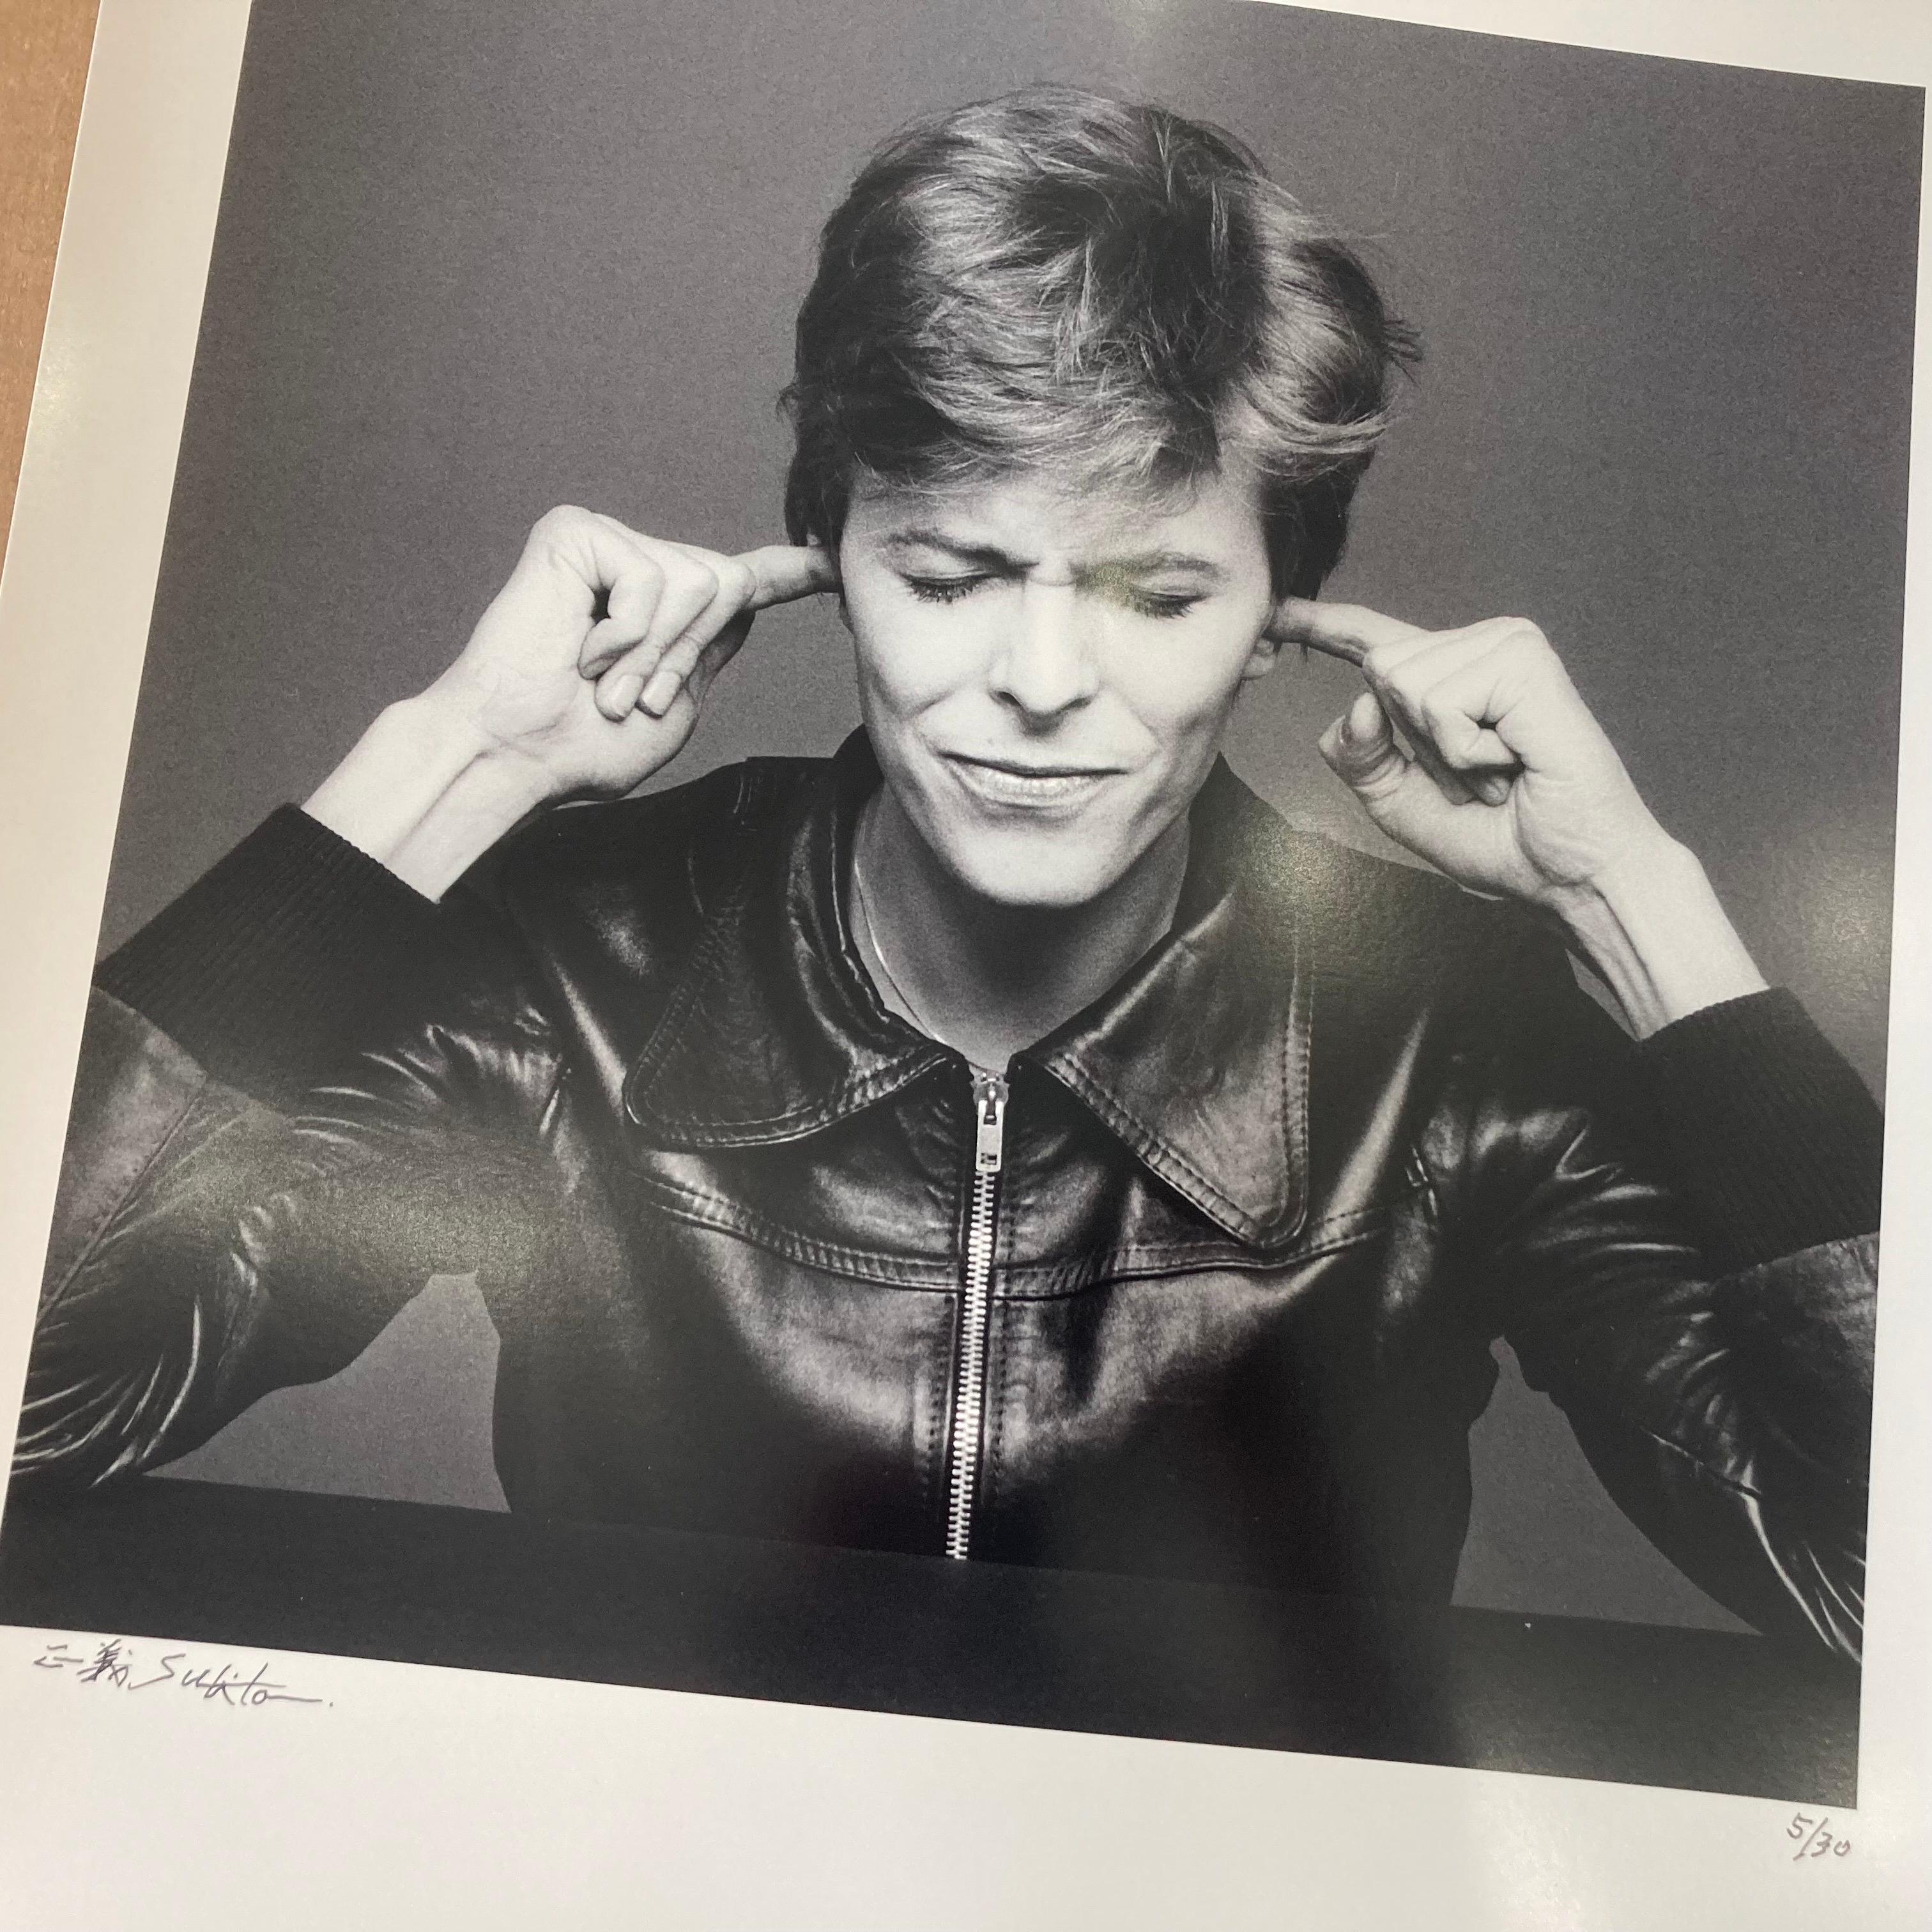 David Bowie 1977 Heroes session - set of three prints - Photorealist Photograph by Masayoshi Sukita